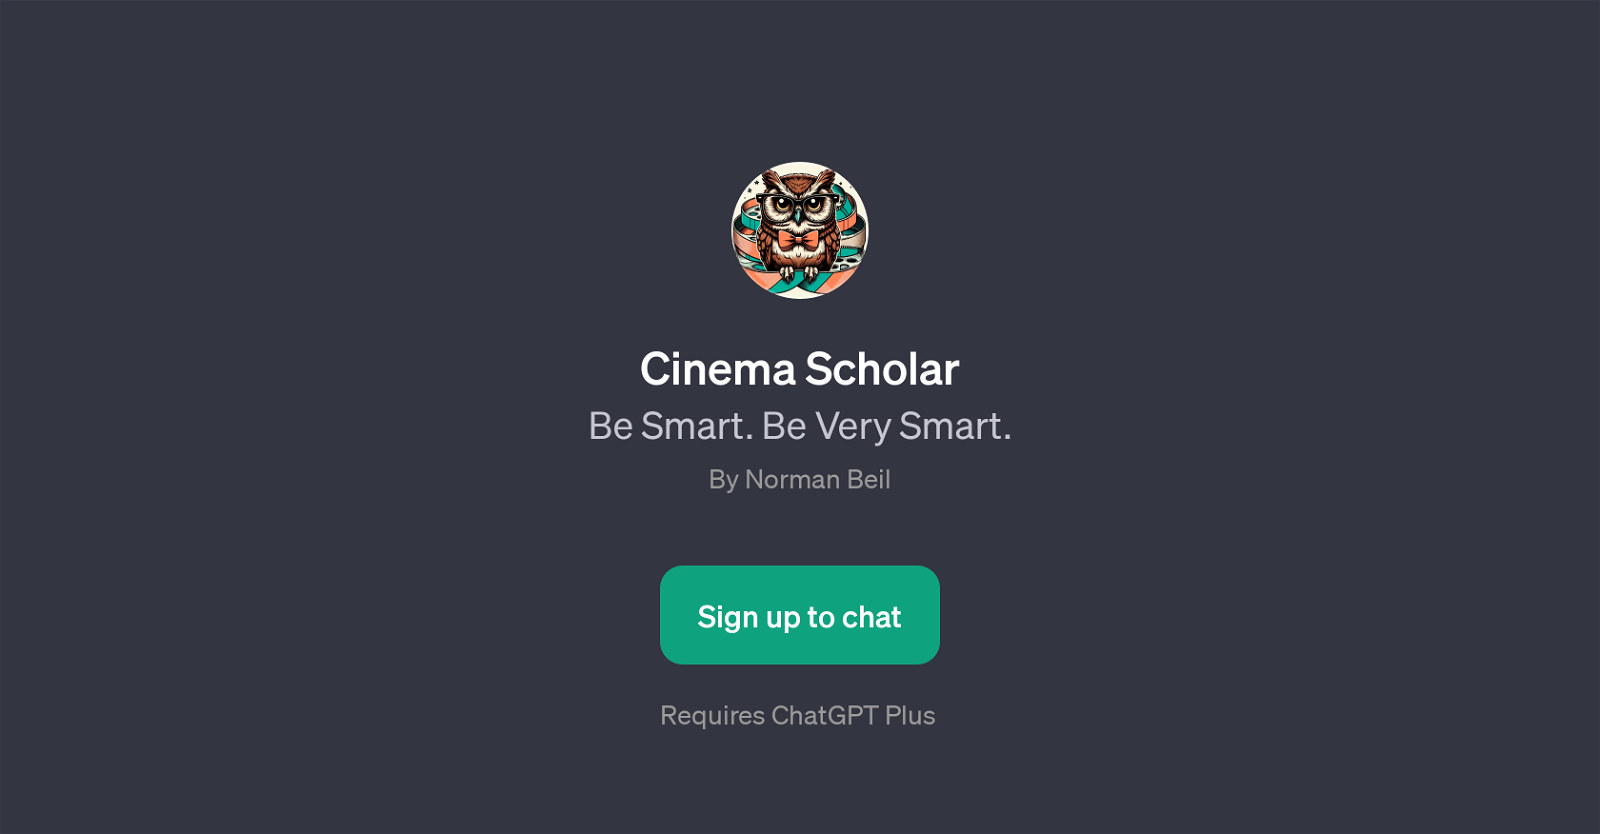 Cinema Scholar website